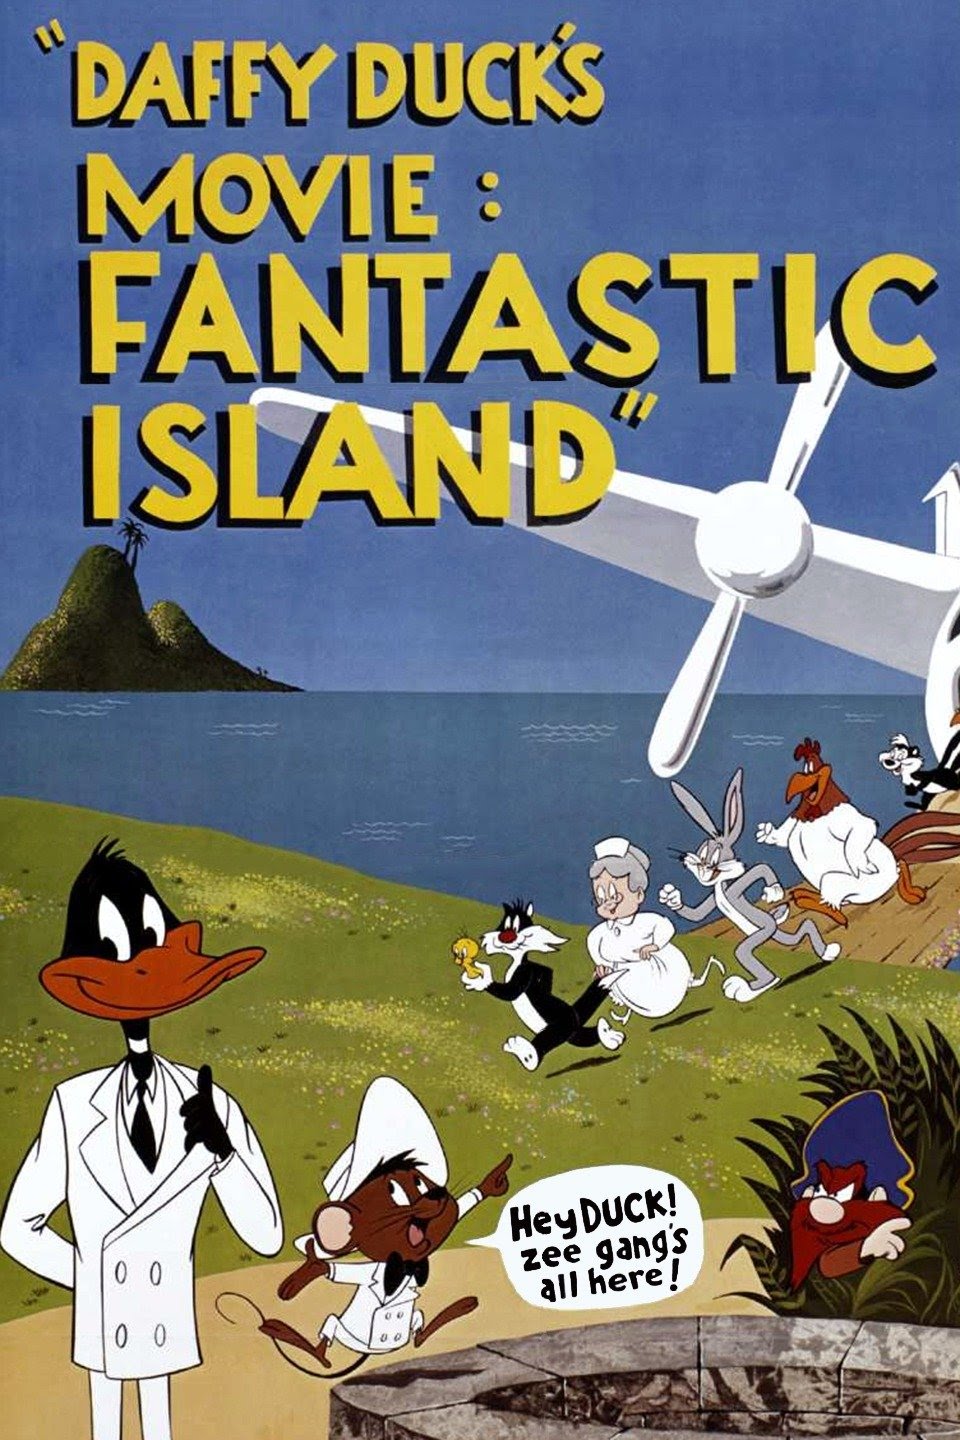 Daffy Duck's Fantastic Island | Warner Bros. Entertainment Wiki